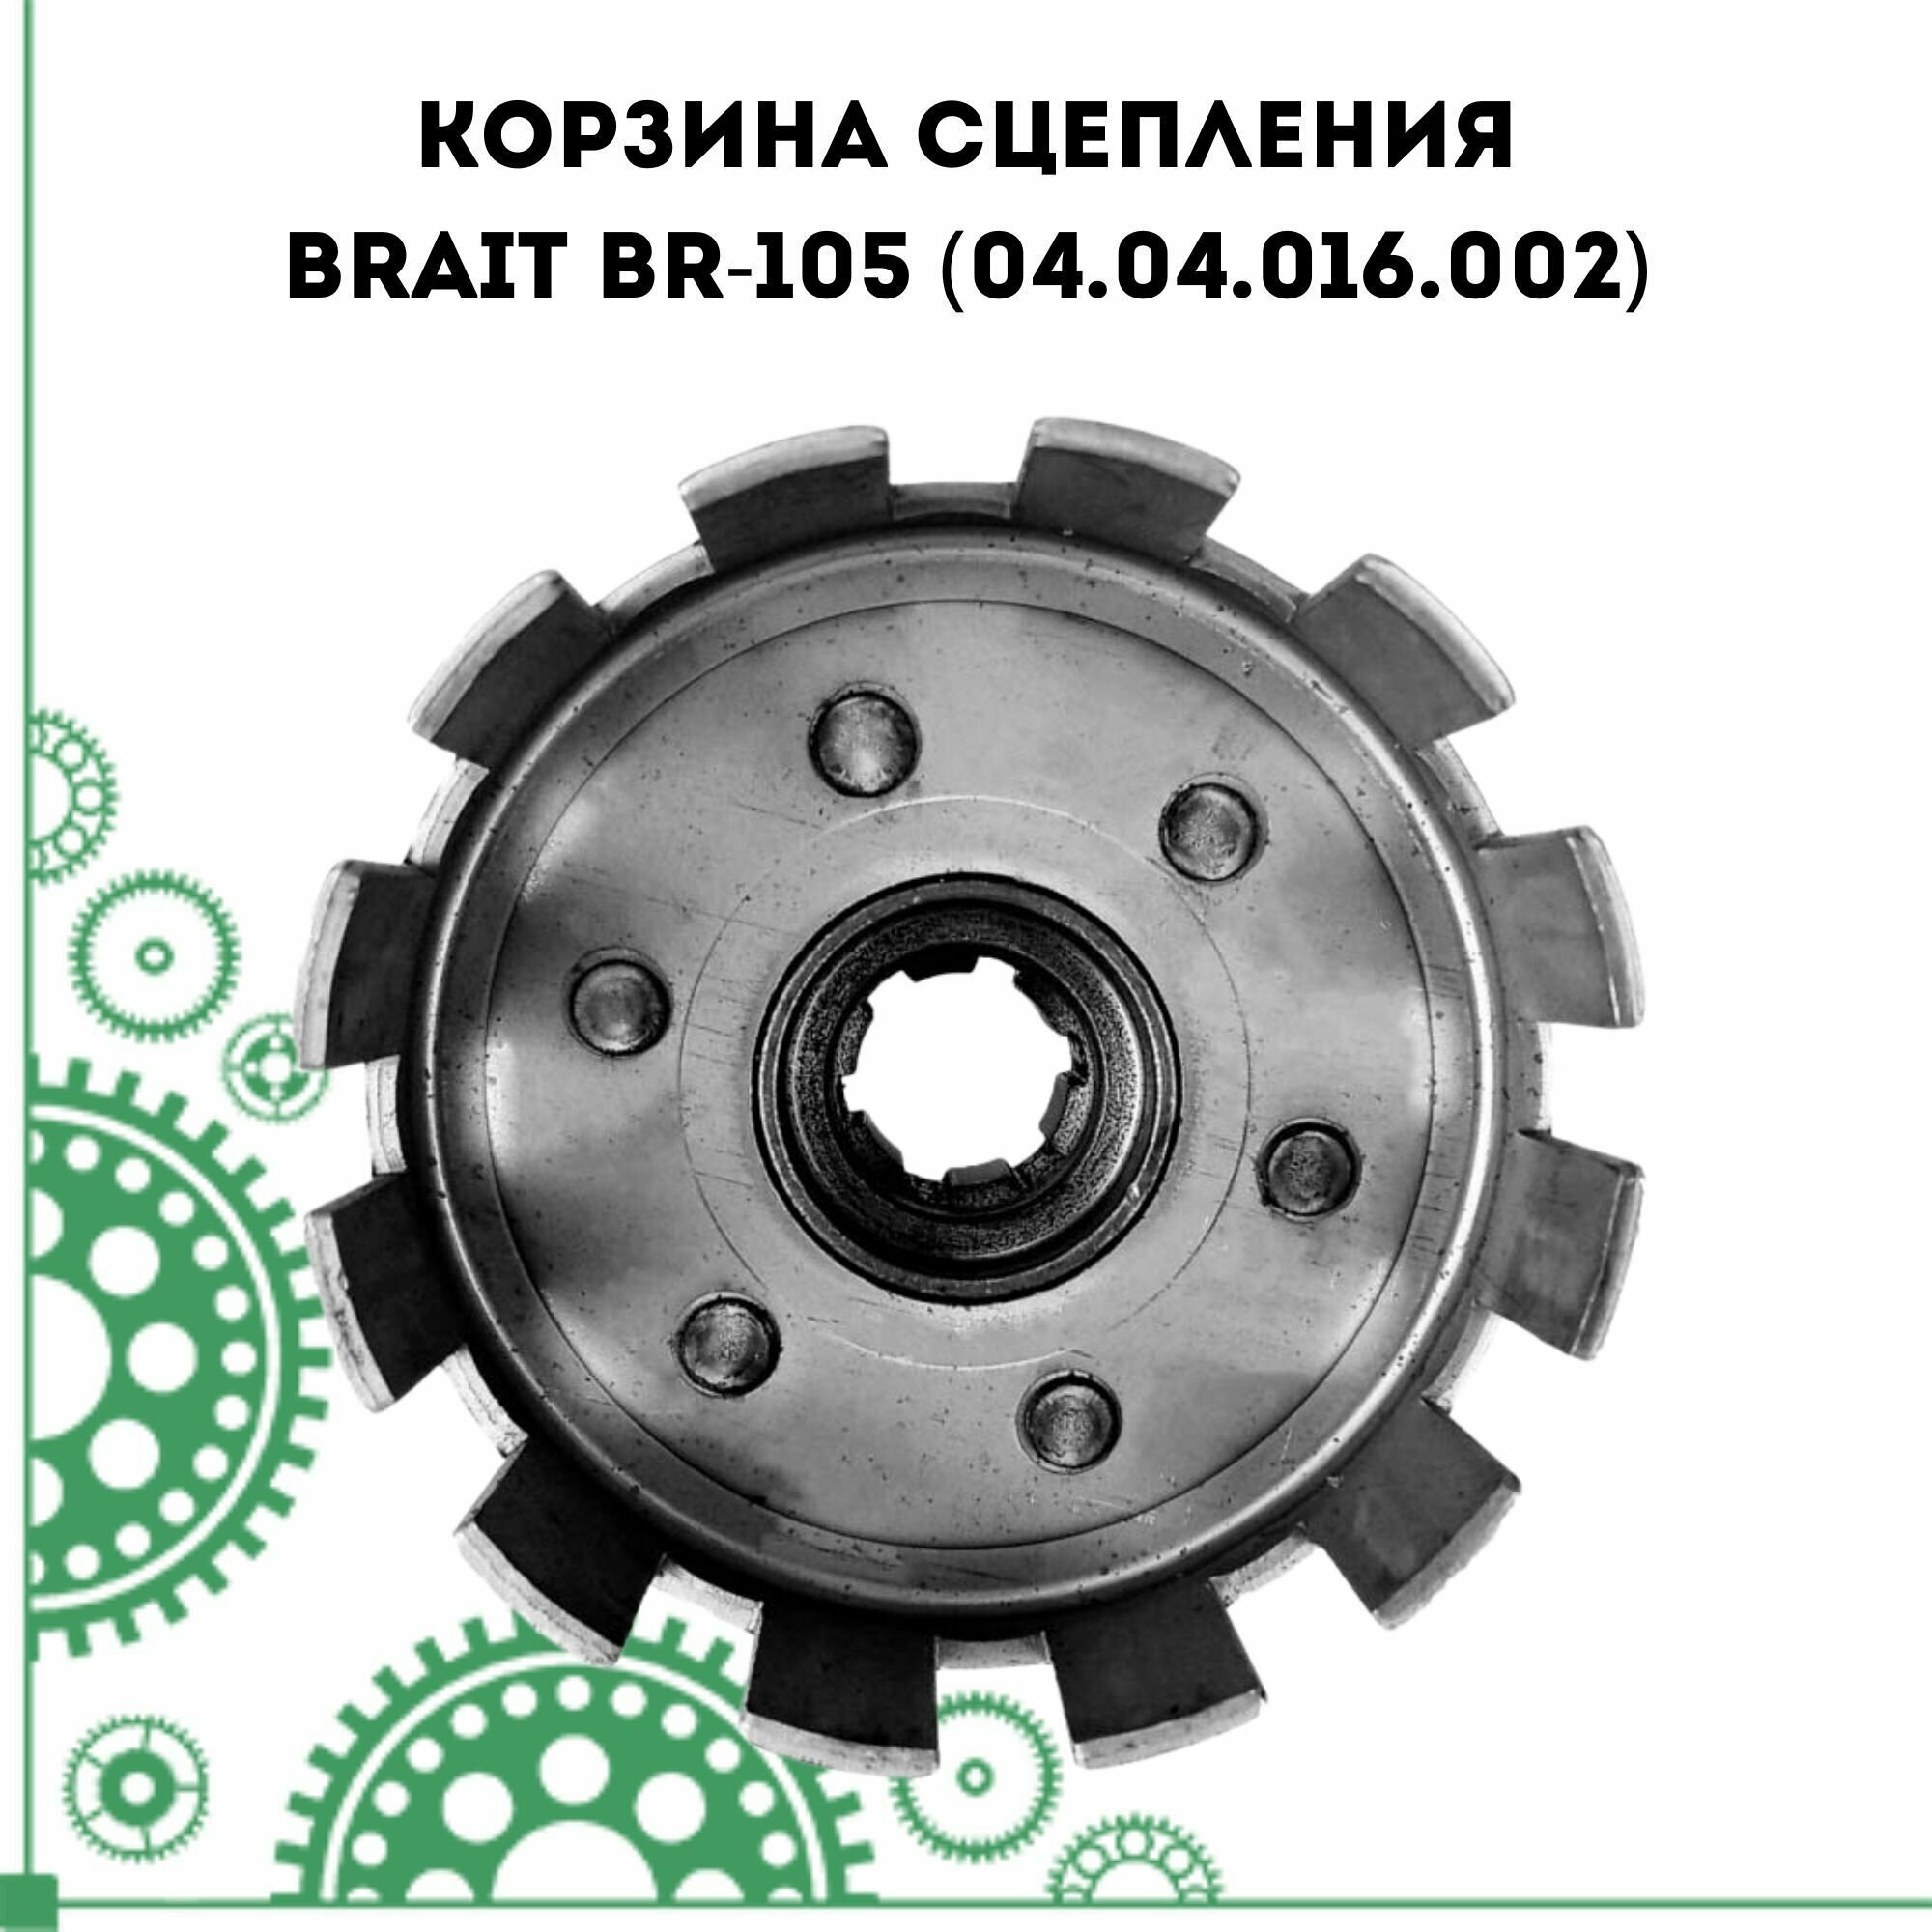 Корзина сцепления Brait BR-105 (04.04.016.002)